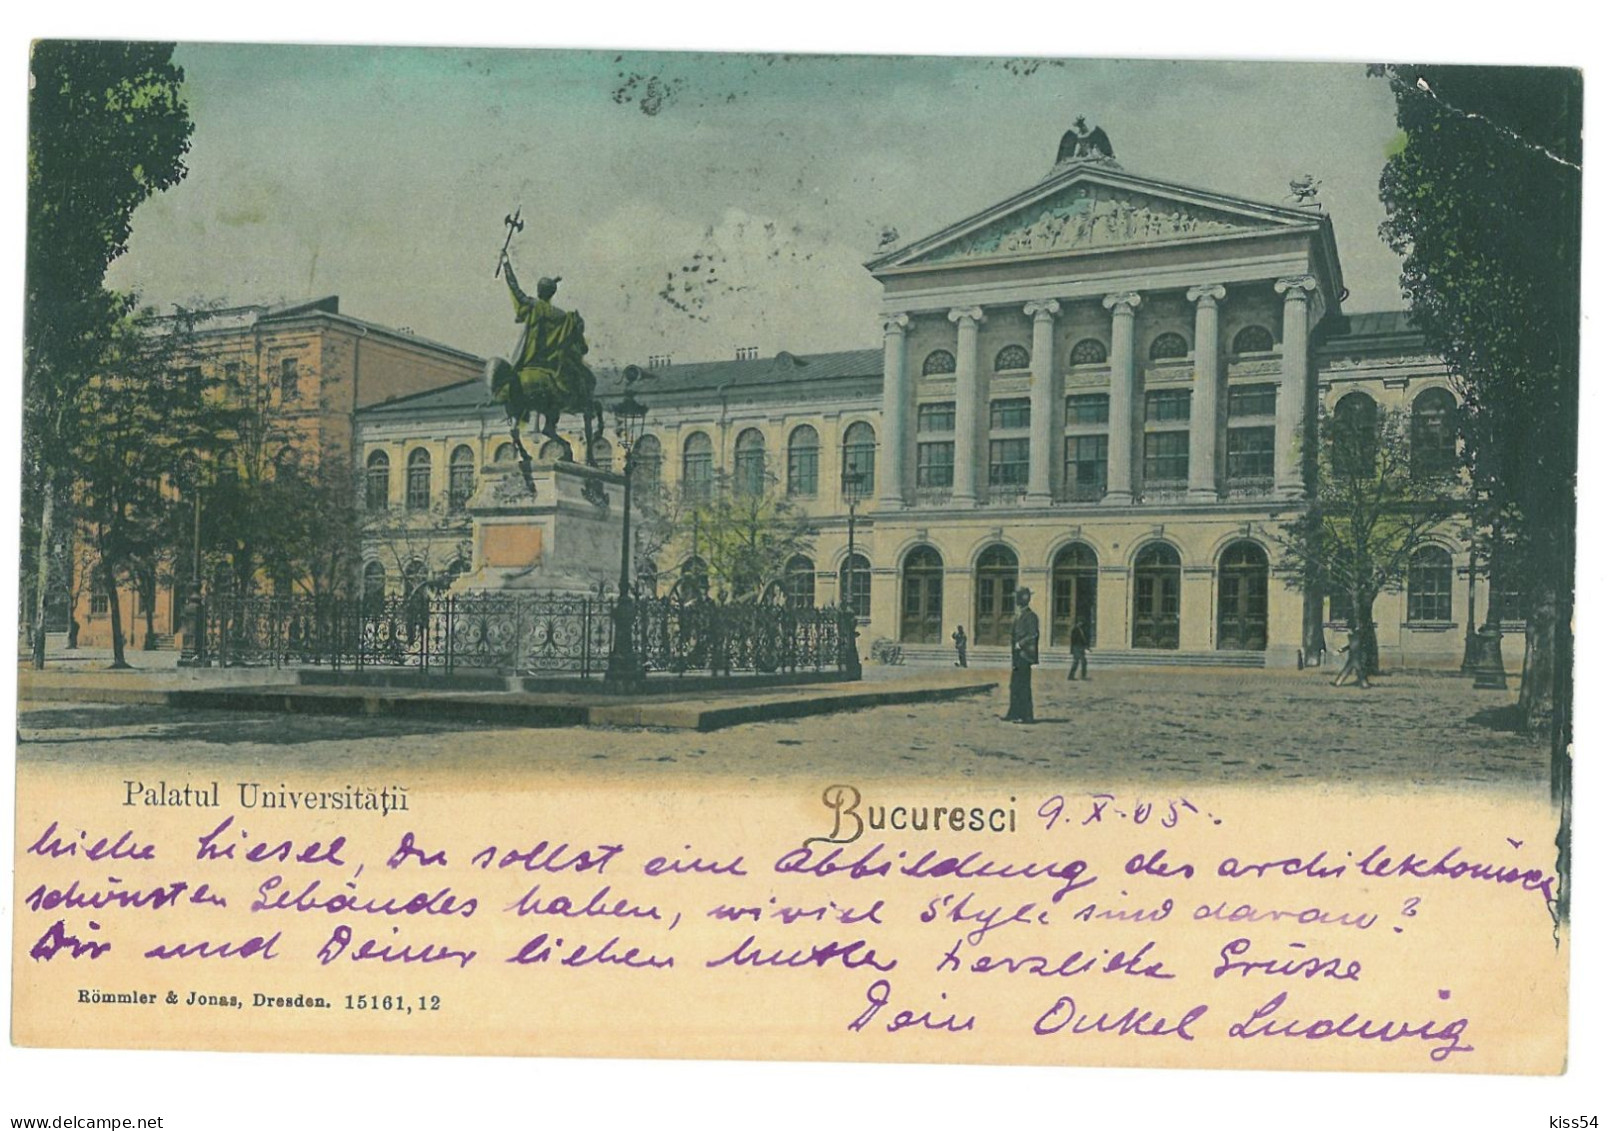 RO 86 - 23780 BUCURESTI, University, Romania - Old Postcard - Used - 1905 - Romania